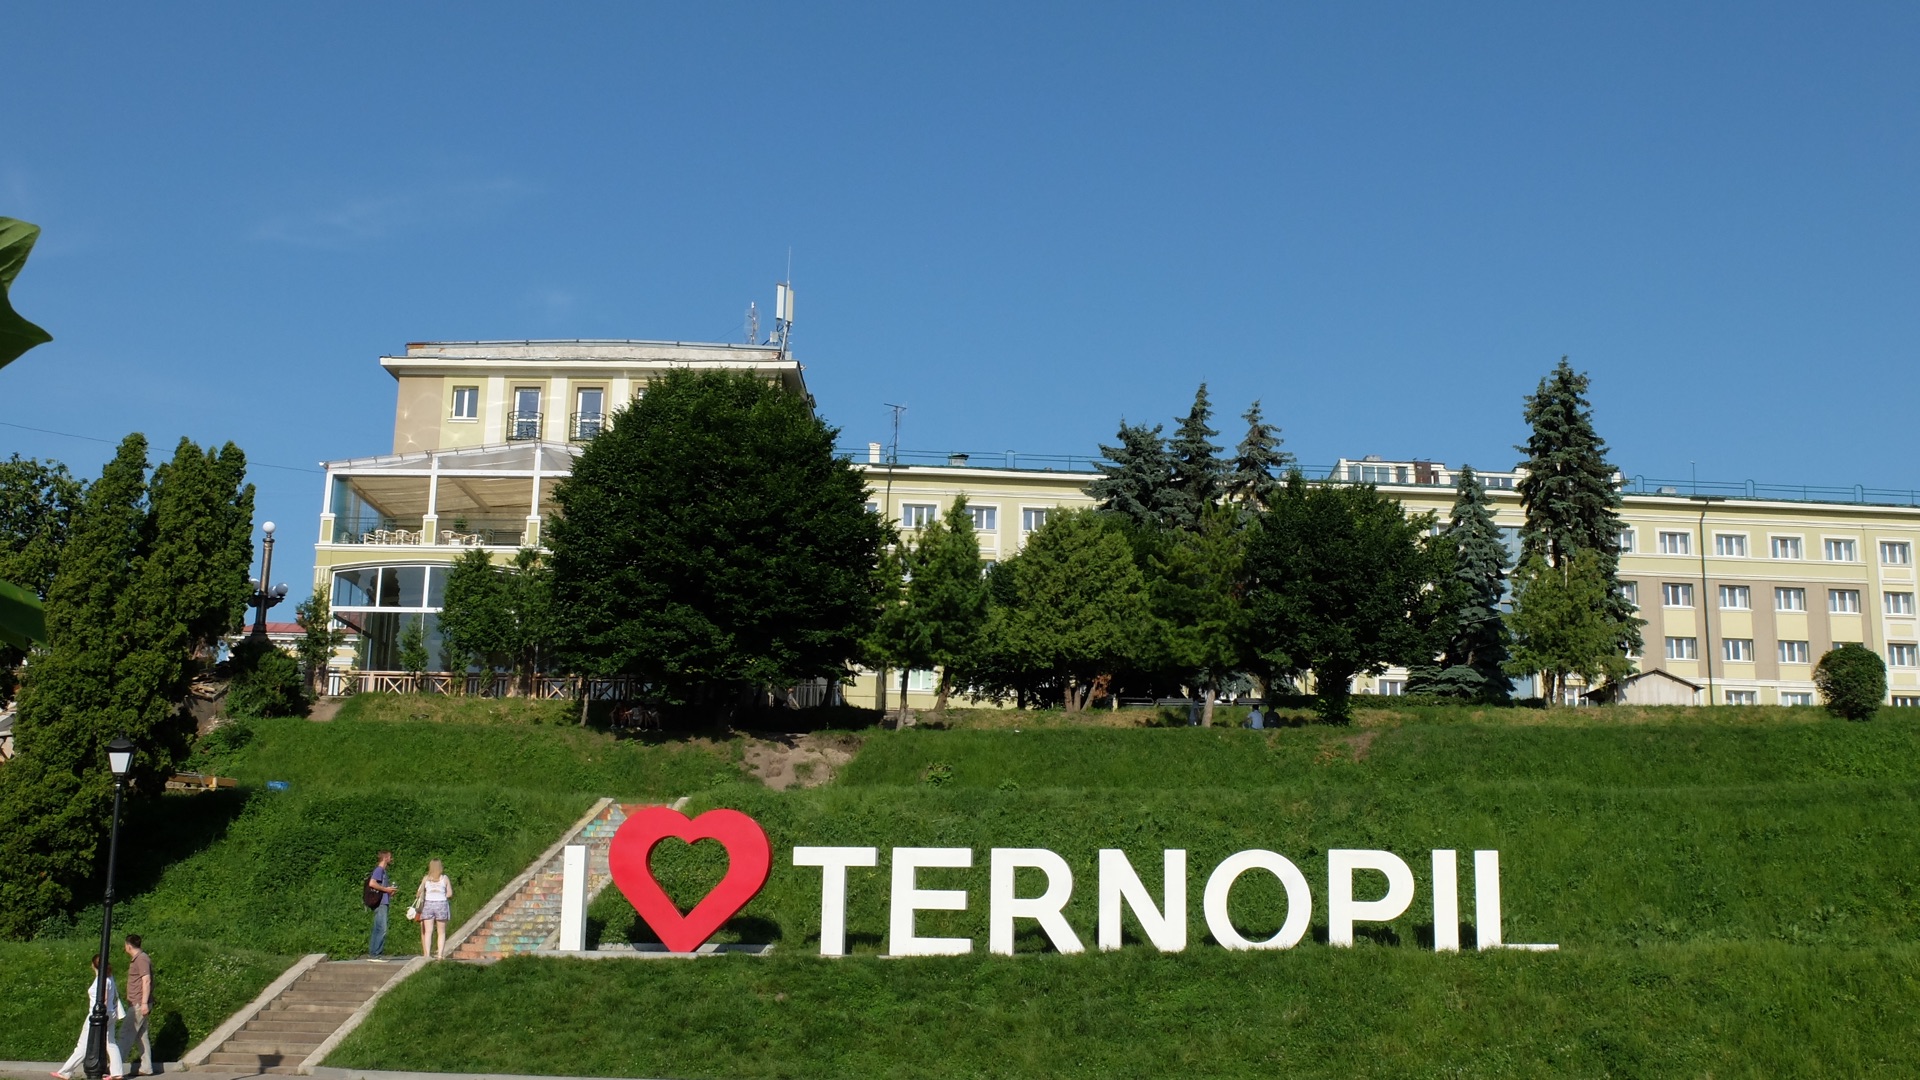 Ternopil – not Chernobyl